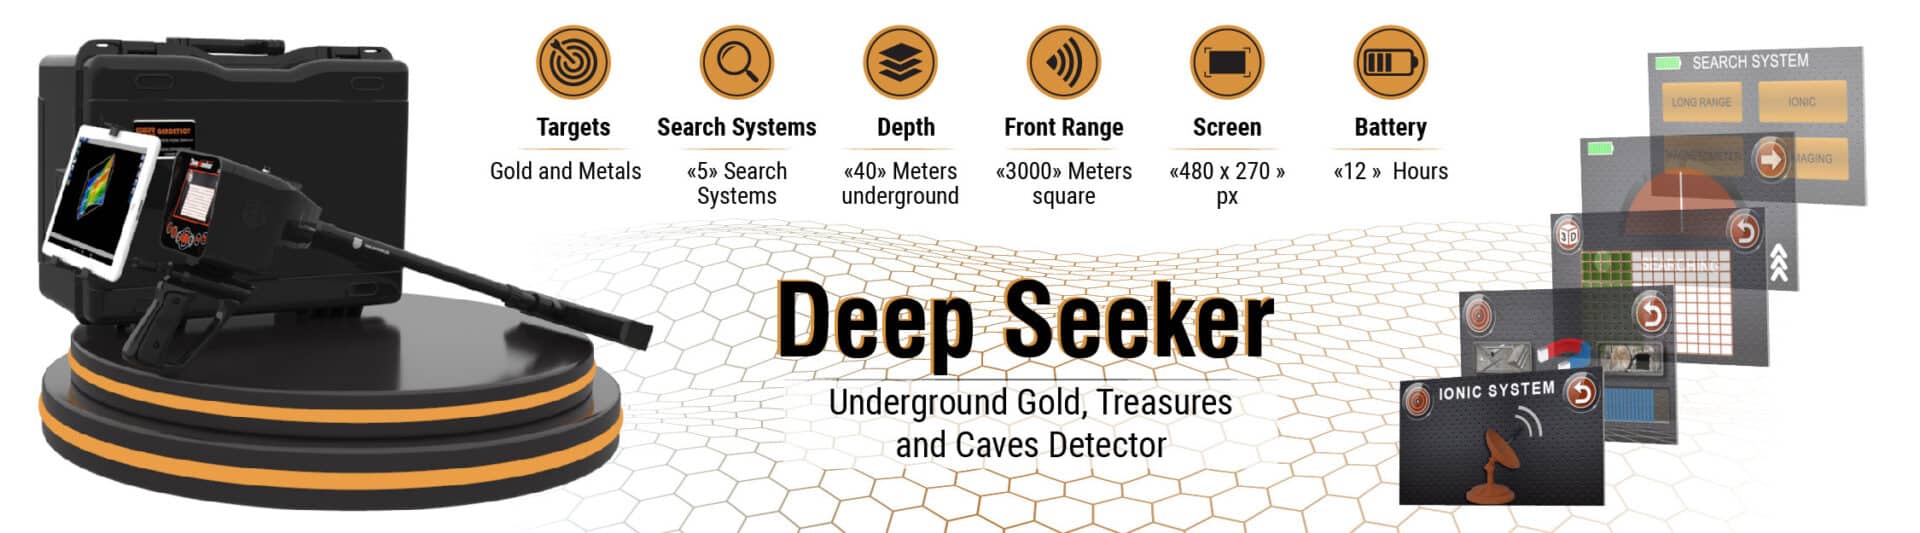 deep seeker Underground Gold, Treasures, And Caves Detector